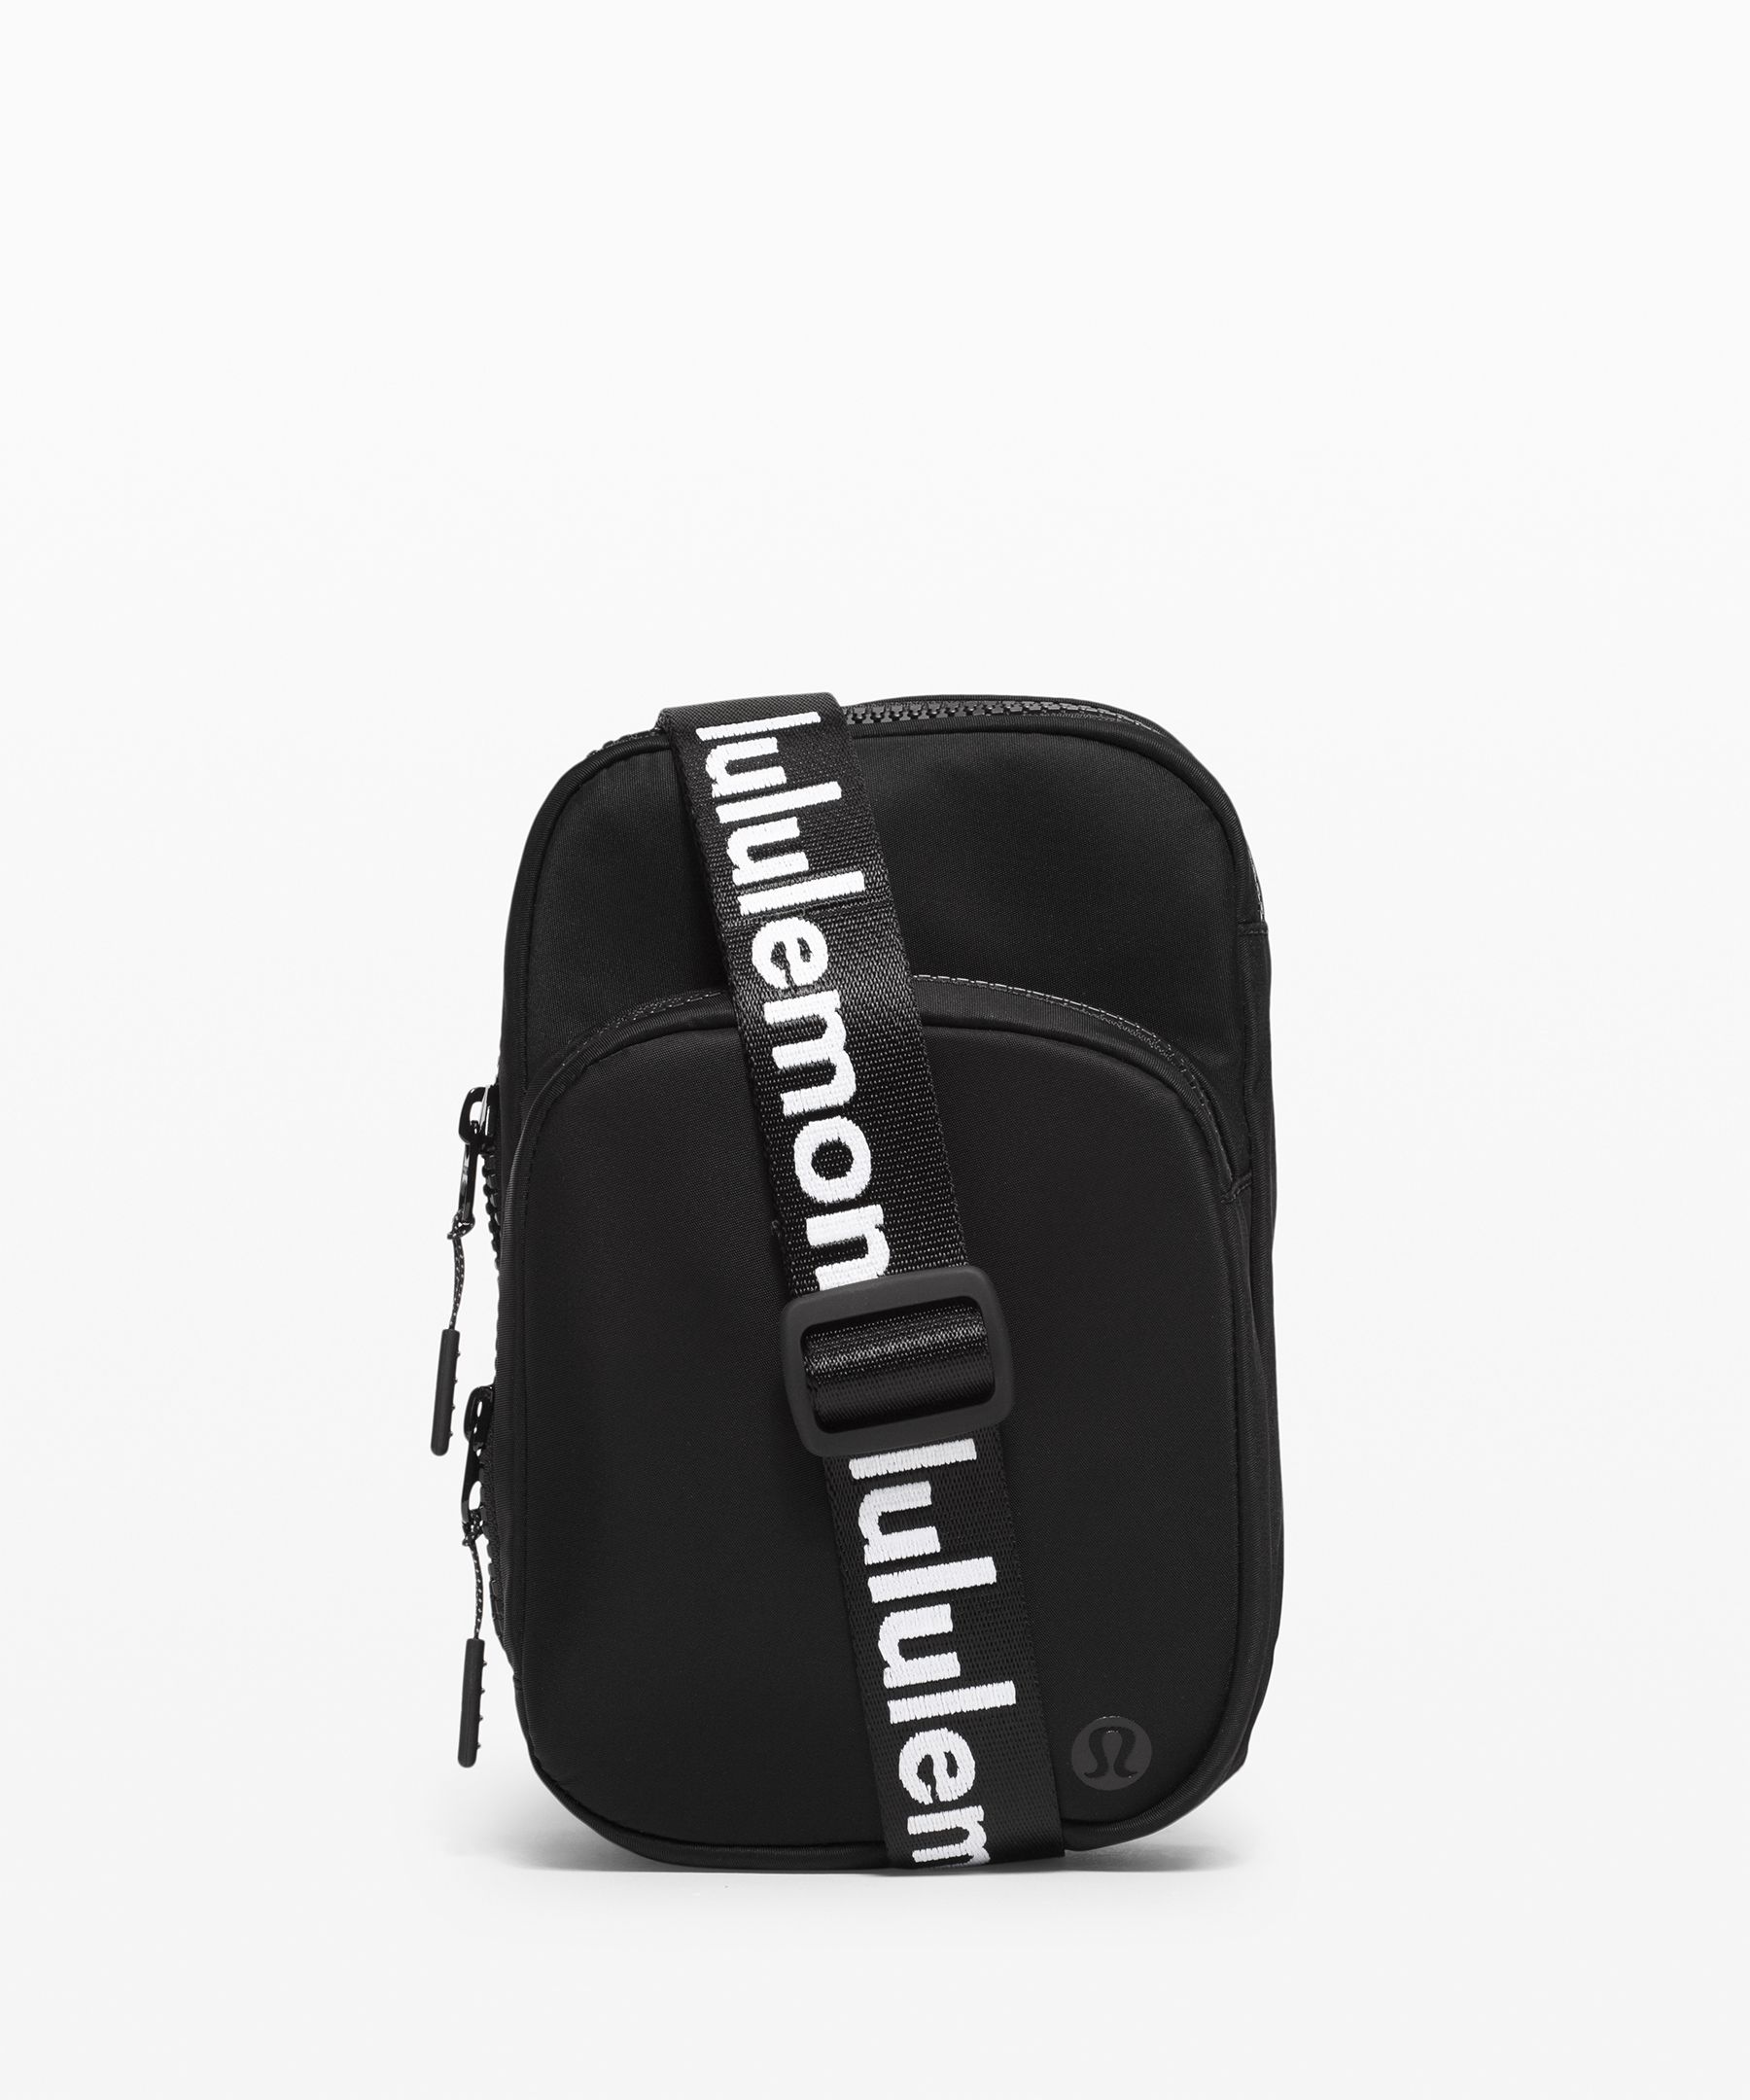 lululemon messenger bag